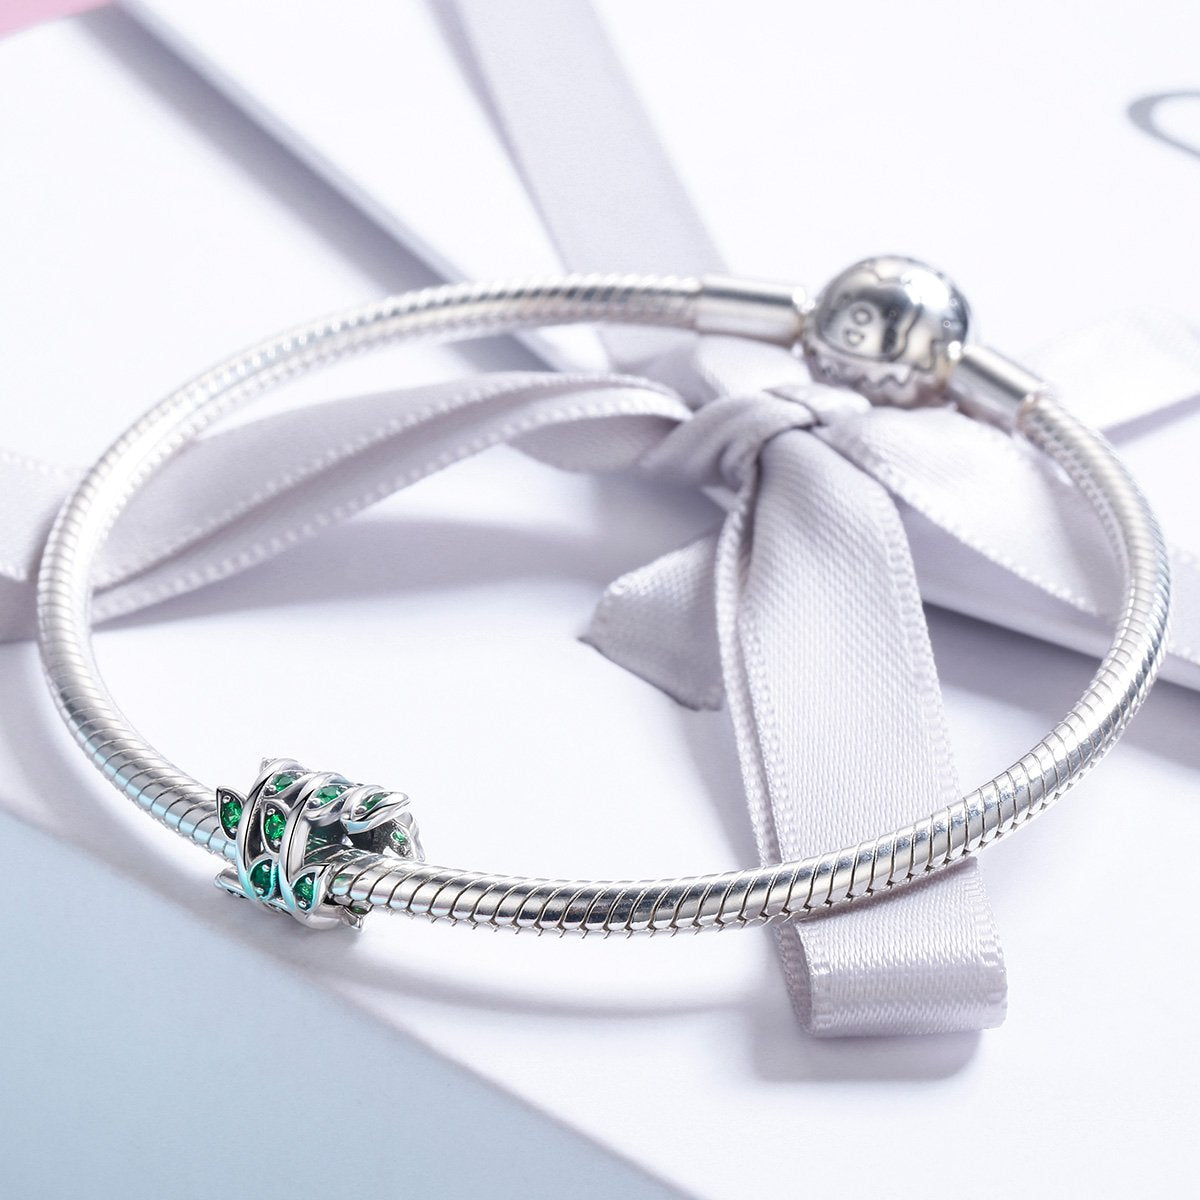 Sterling 925 silver charm the green grass bead pendant fits Pandora charm and European charm bracelet Xaxe.com